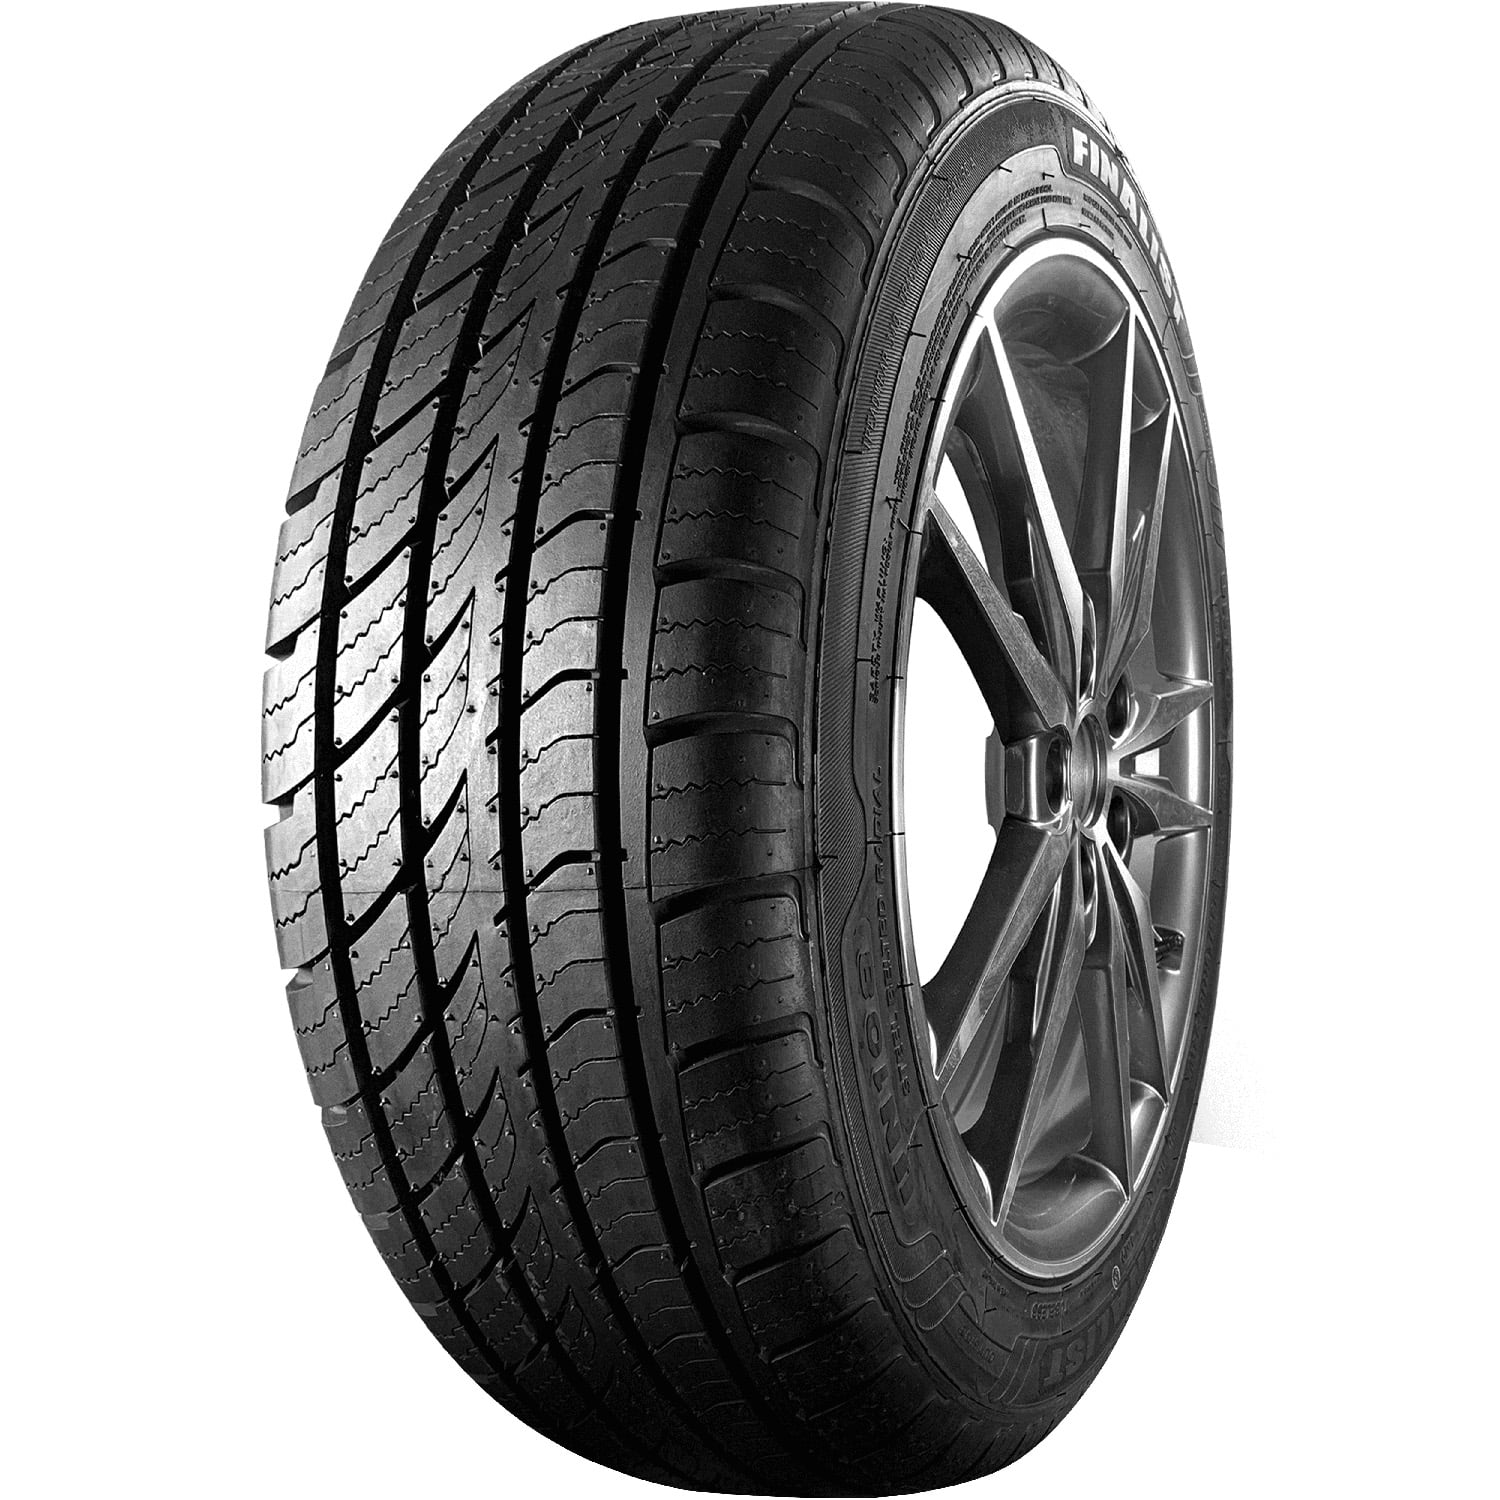 Michelin Primacy MXM4 All Season 235/55R18 100V Passenger Tire